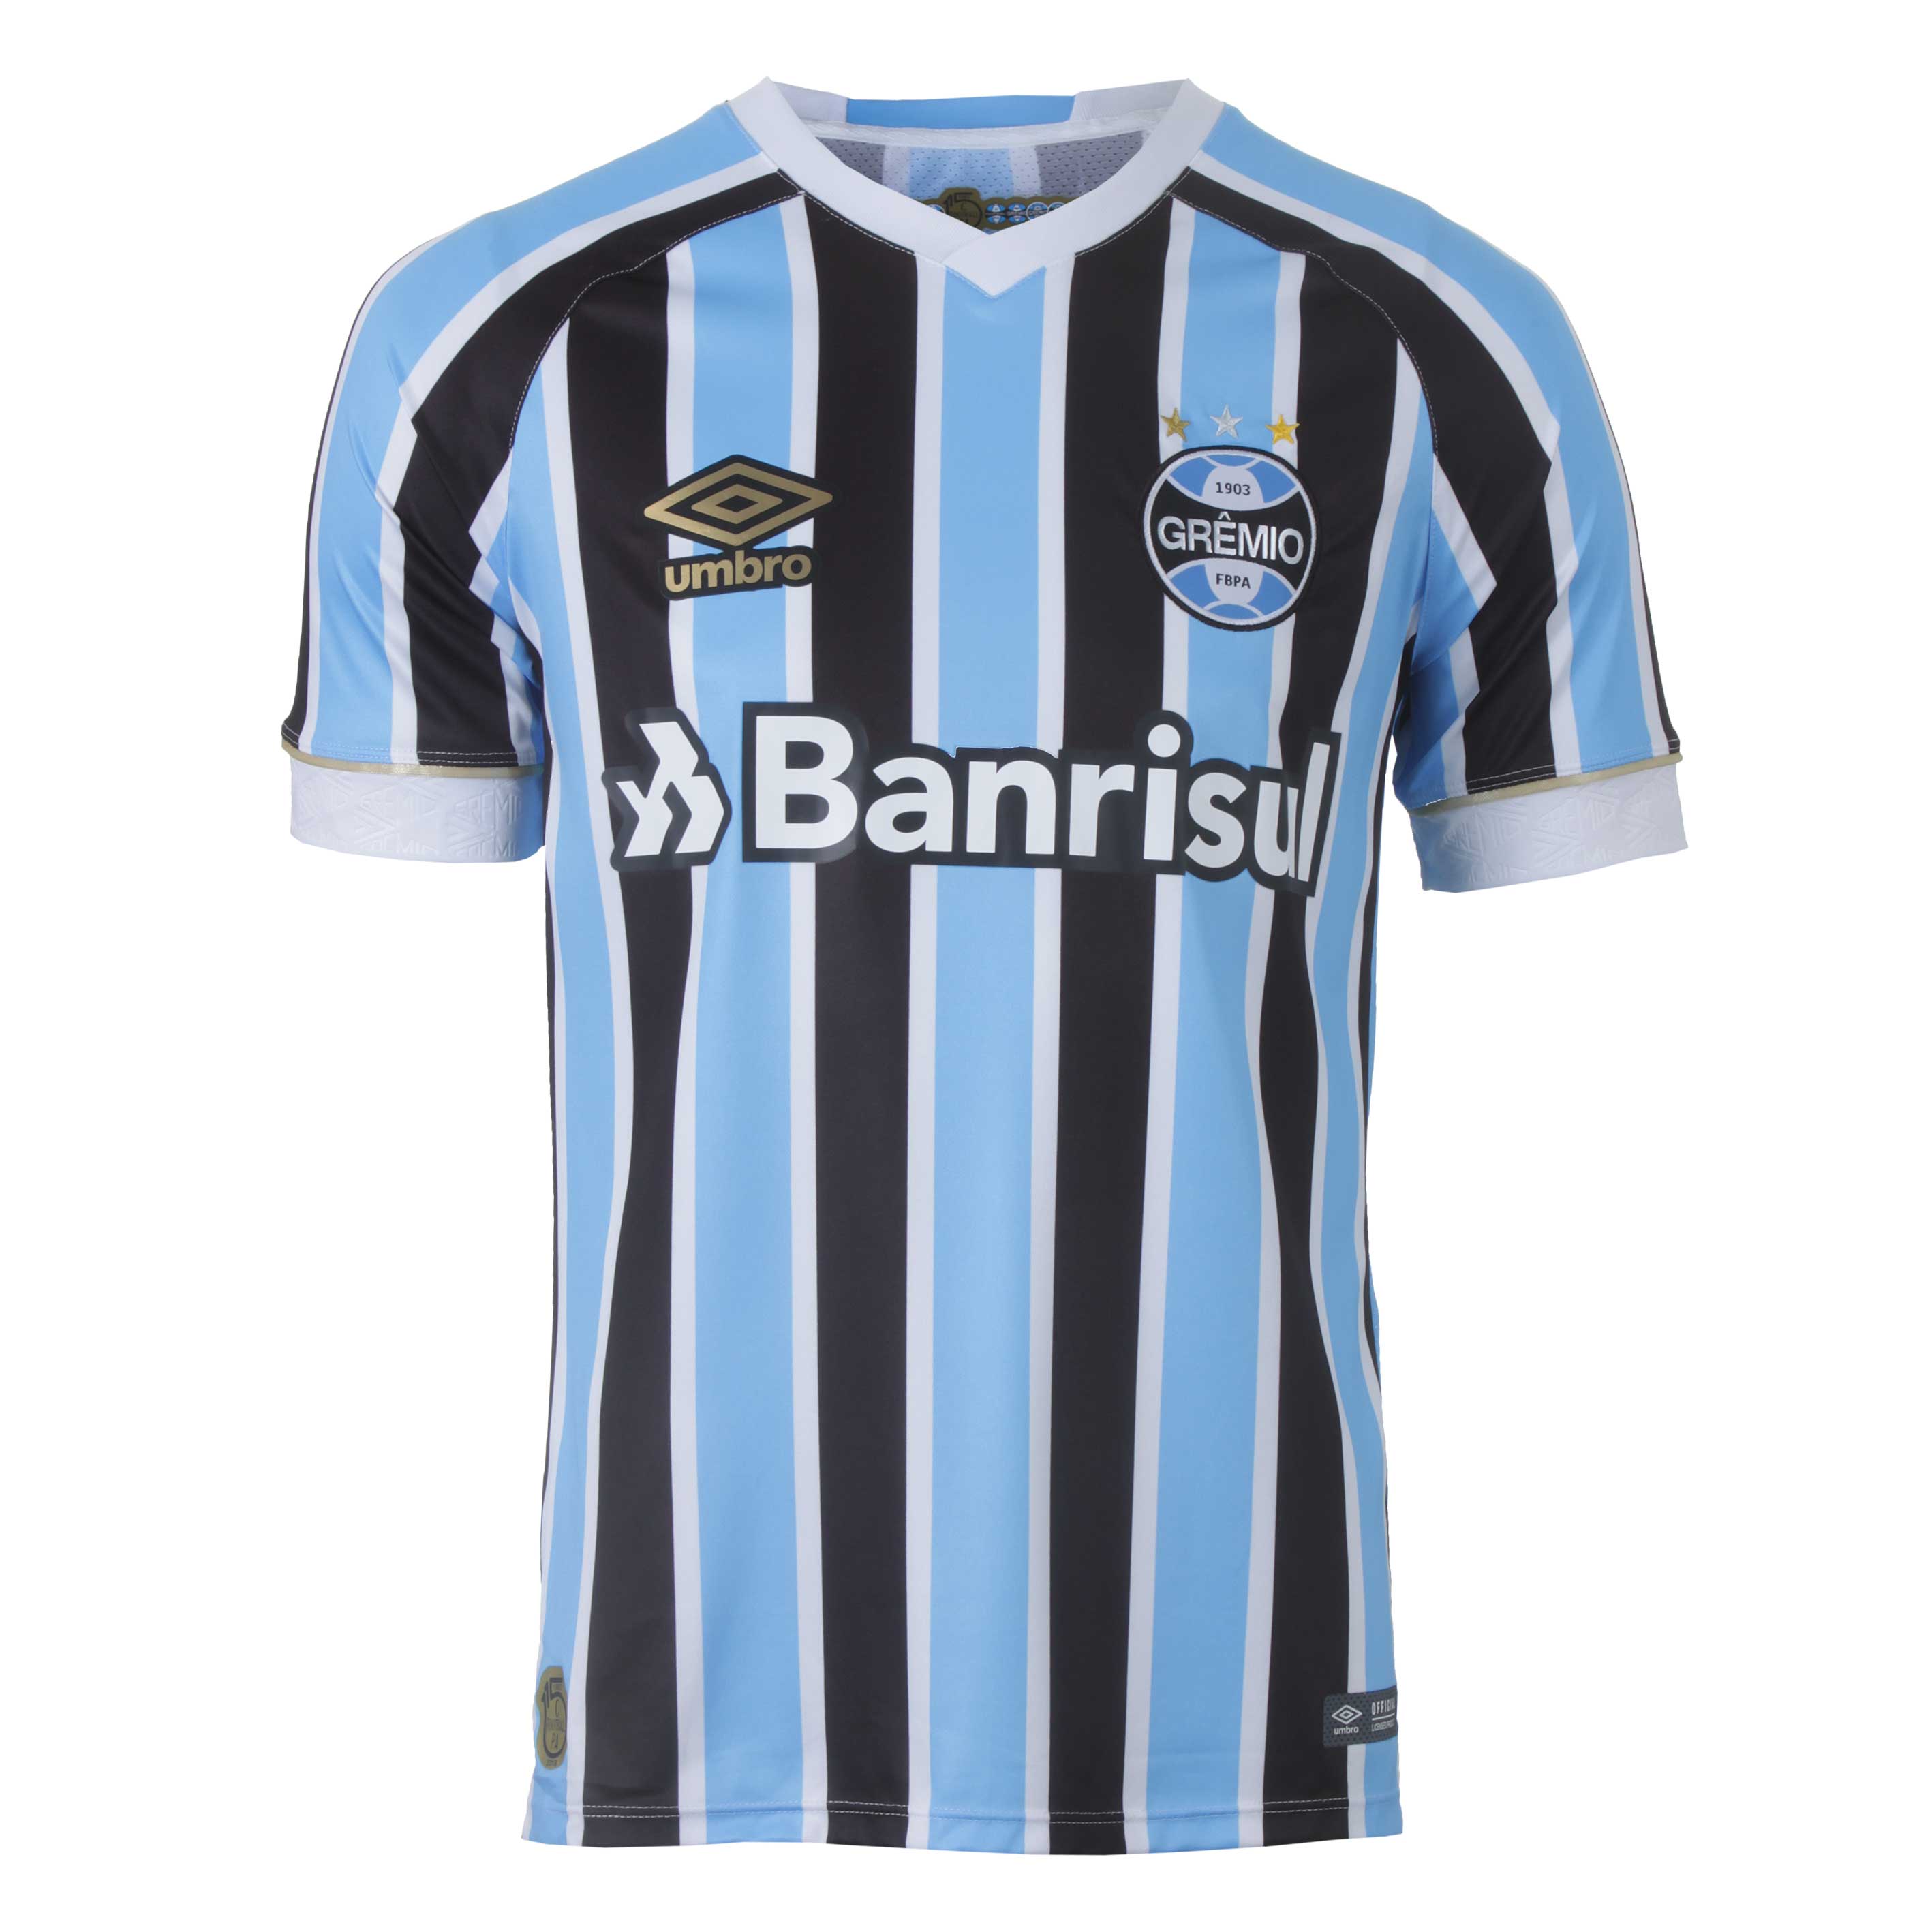 Camiseta Masc. Umbro Gremio Of. 1 2018 Futebol - Celeste/Preto